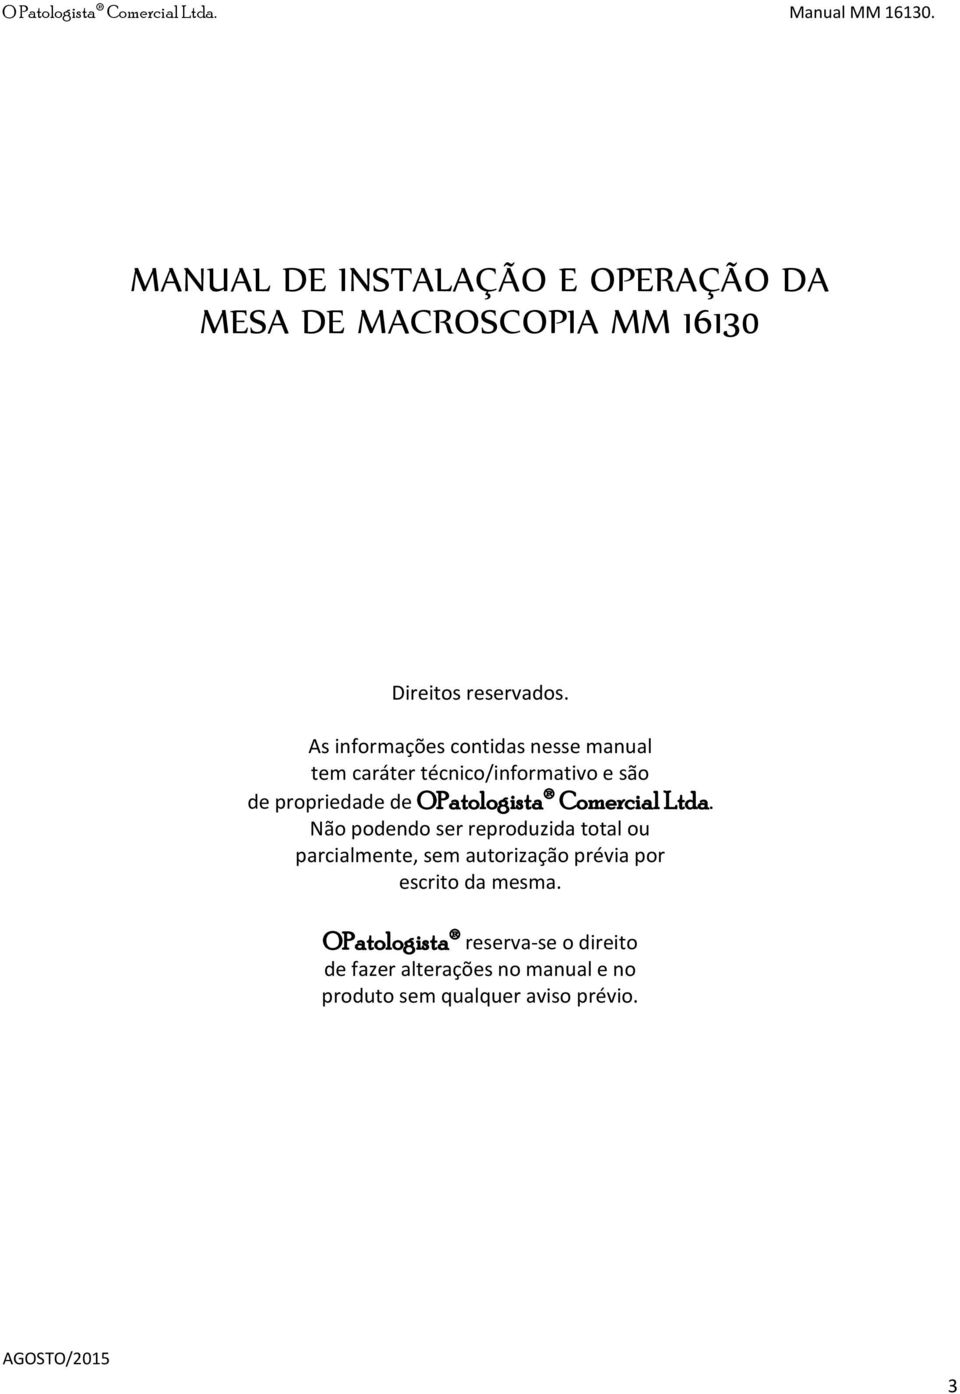 OPatologista Comercial Ltda.